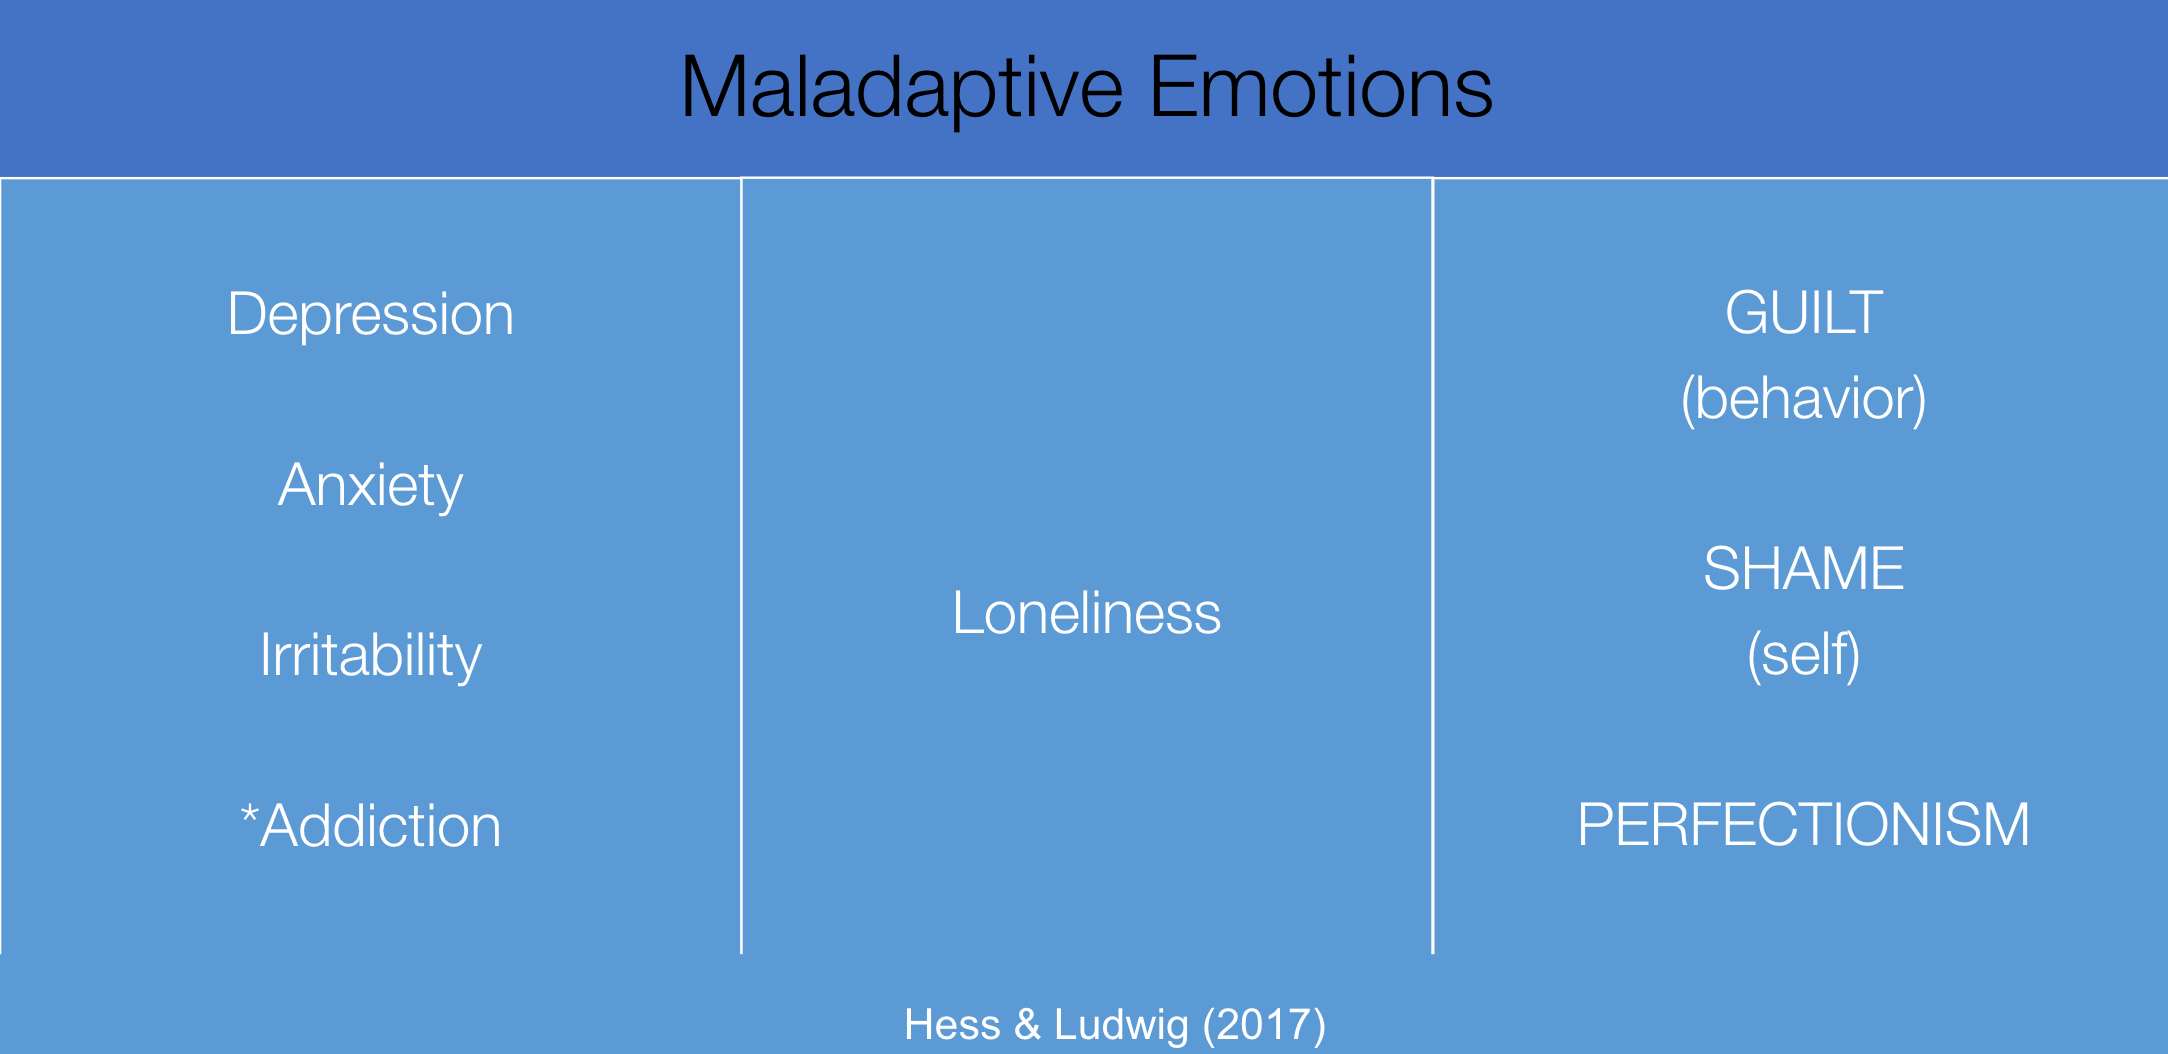 Examples of maladaptive emotions